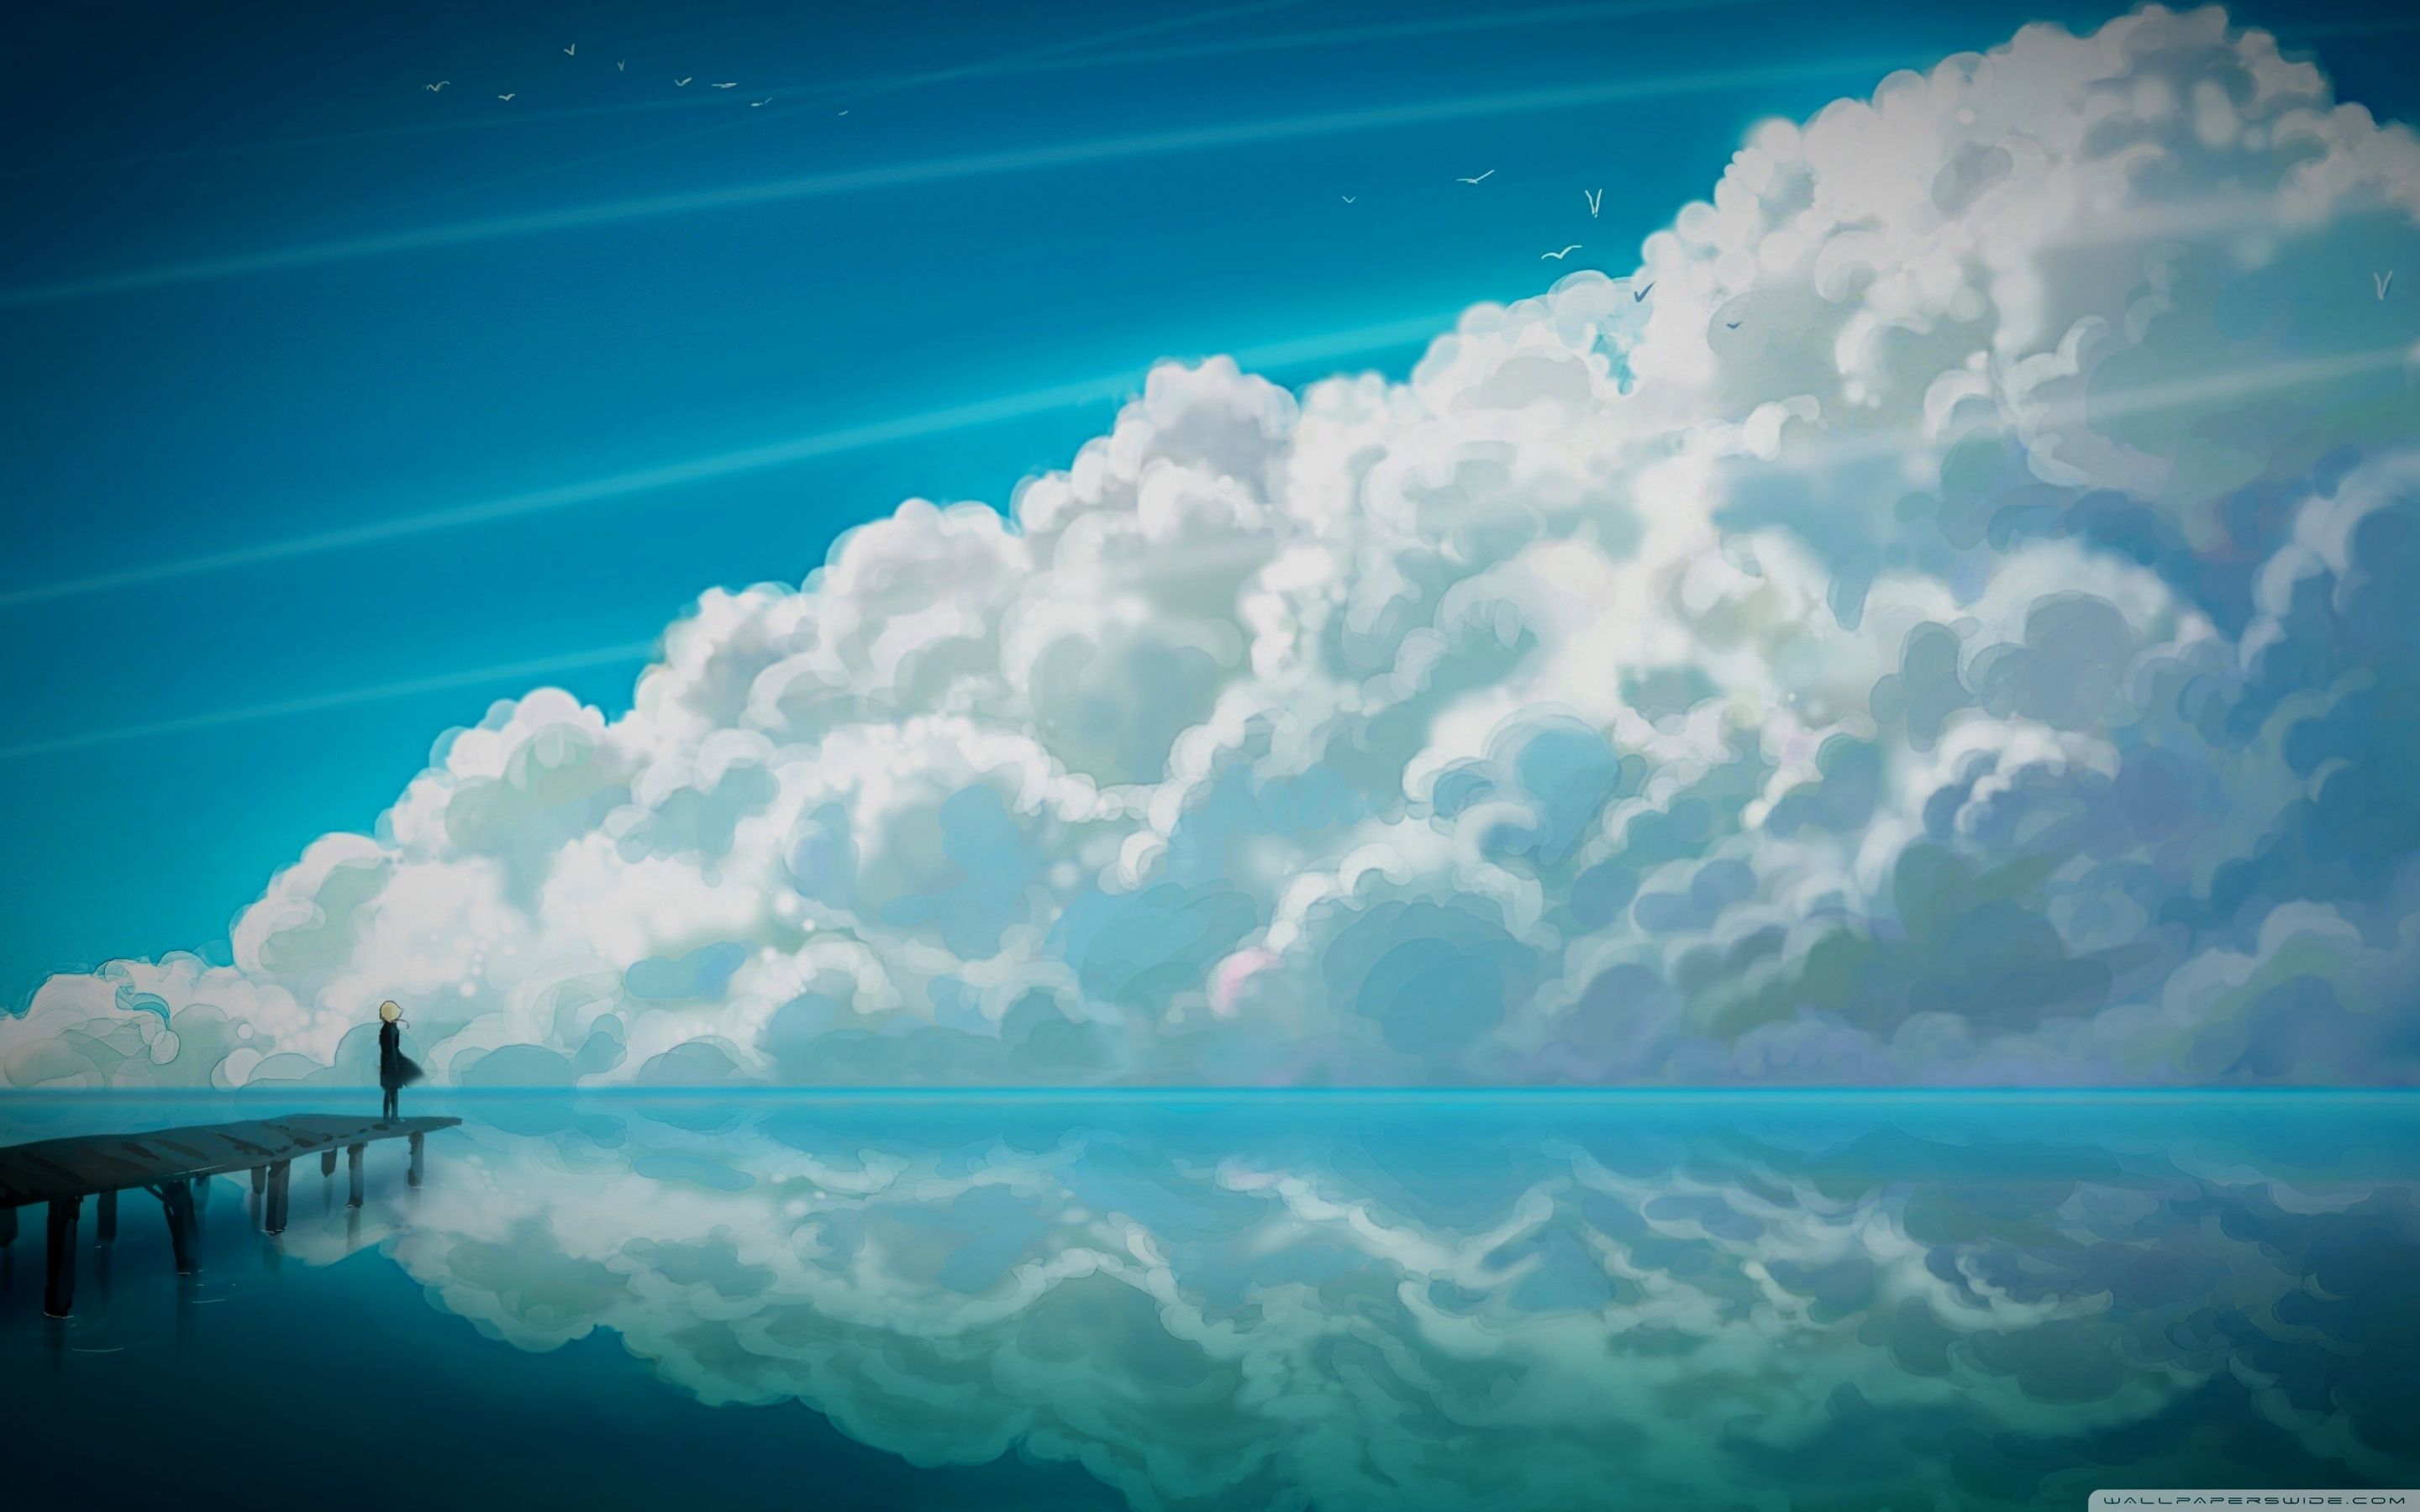 Free Anime Mac Wallpaper, iMac Wallpaper, Retina MacBook Pro. Anime scenery wallpaper, Anime scenery, Clouds